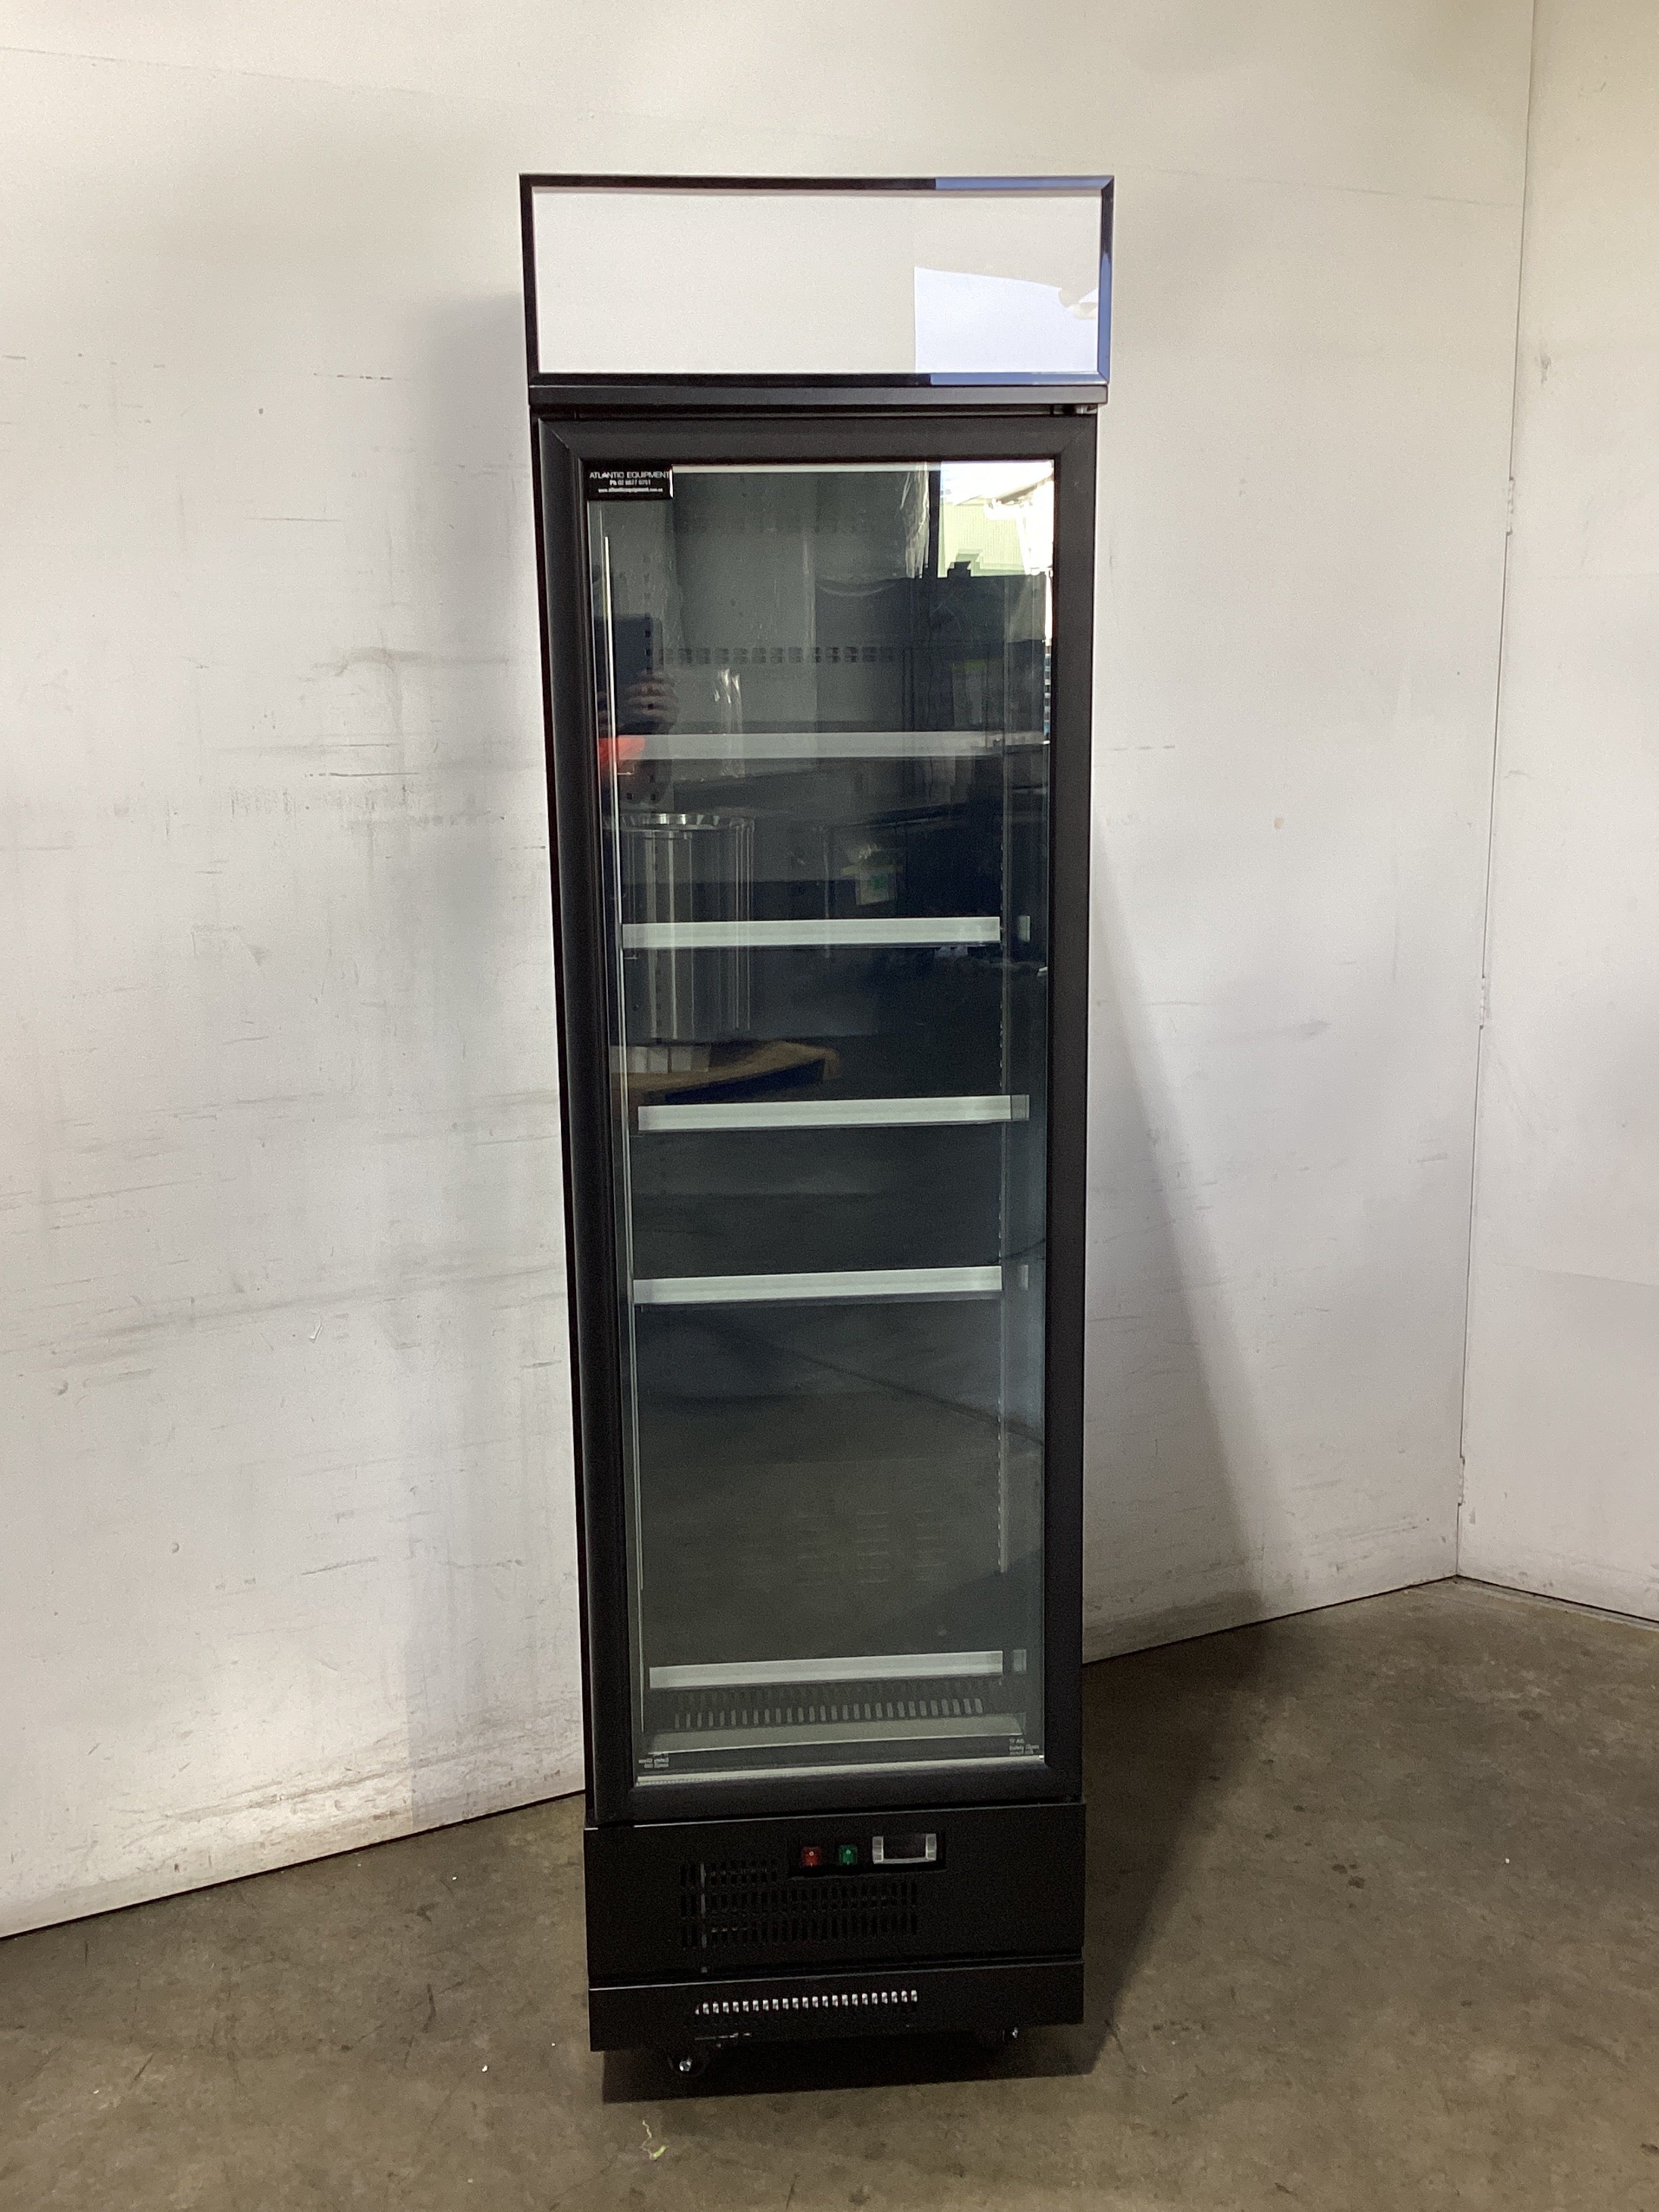 Thumbnail - Austune AGF1-600LB Upright Display Freezer